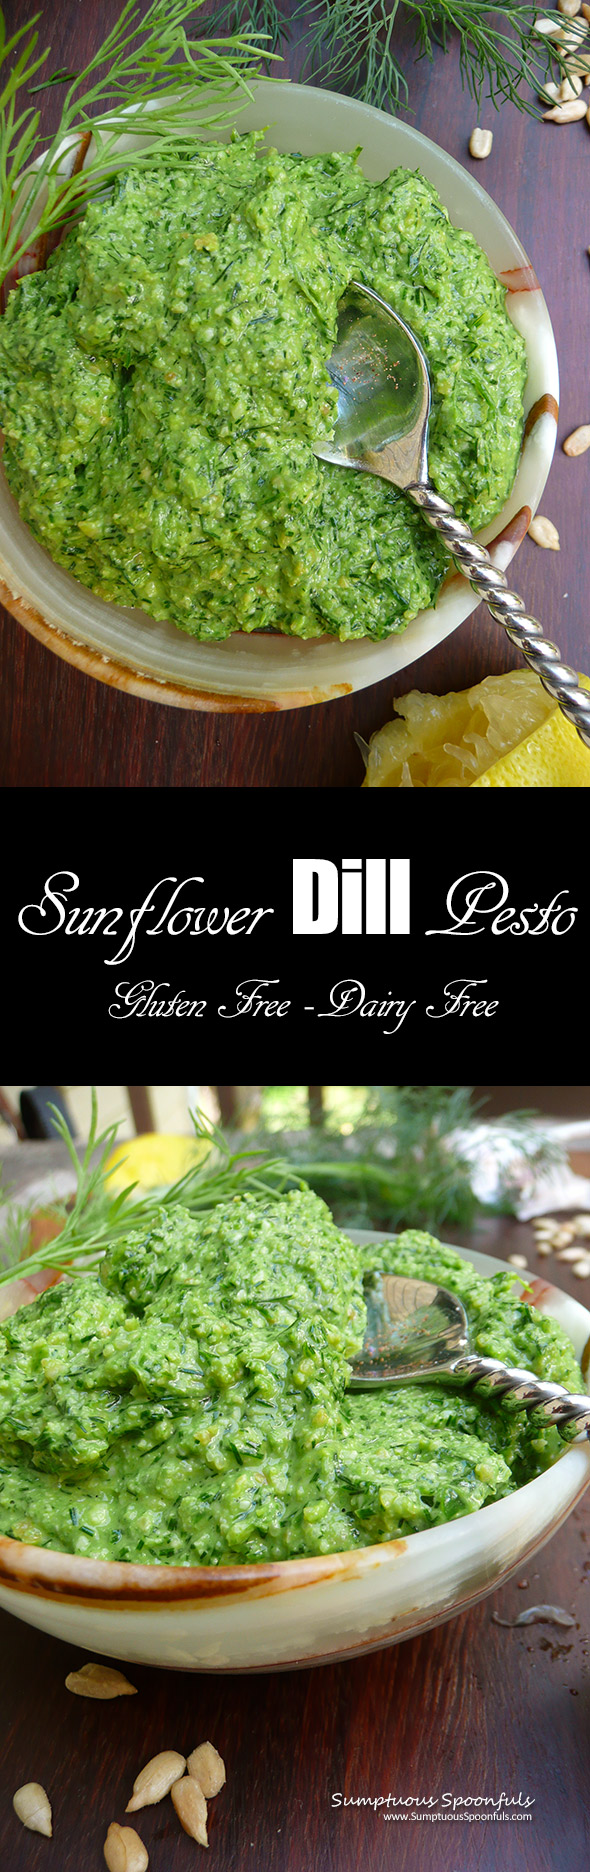 Sunflower Dill Pesto ~ Sumptuous Spoonfuls #dill #pesto #recipe #glutenfree #dairyfree #nutfree